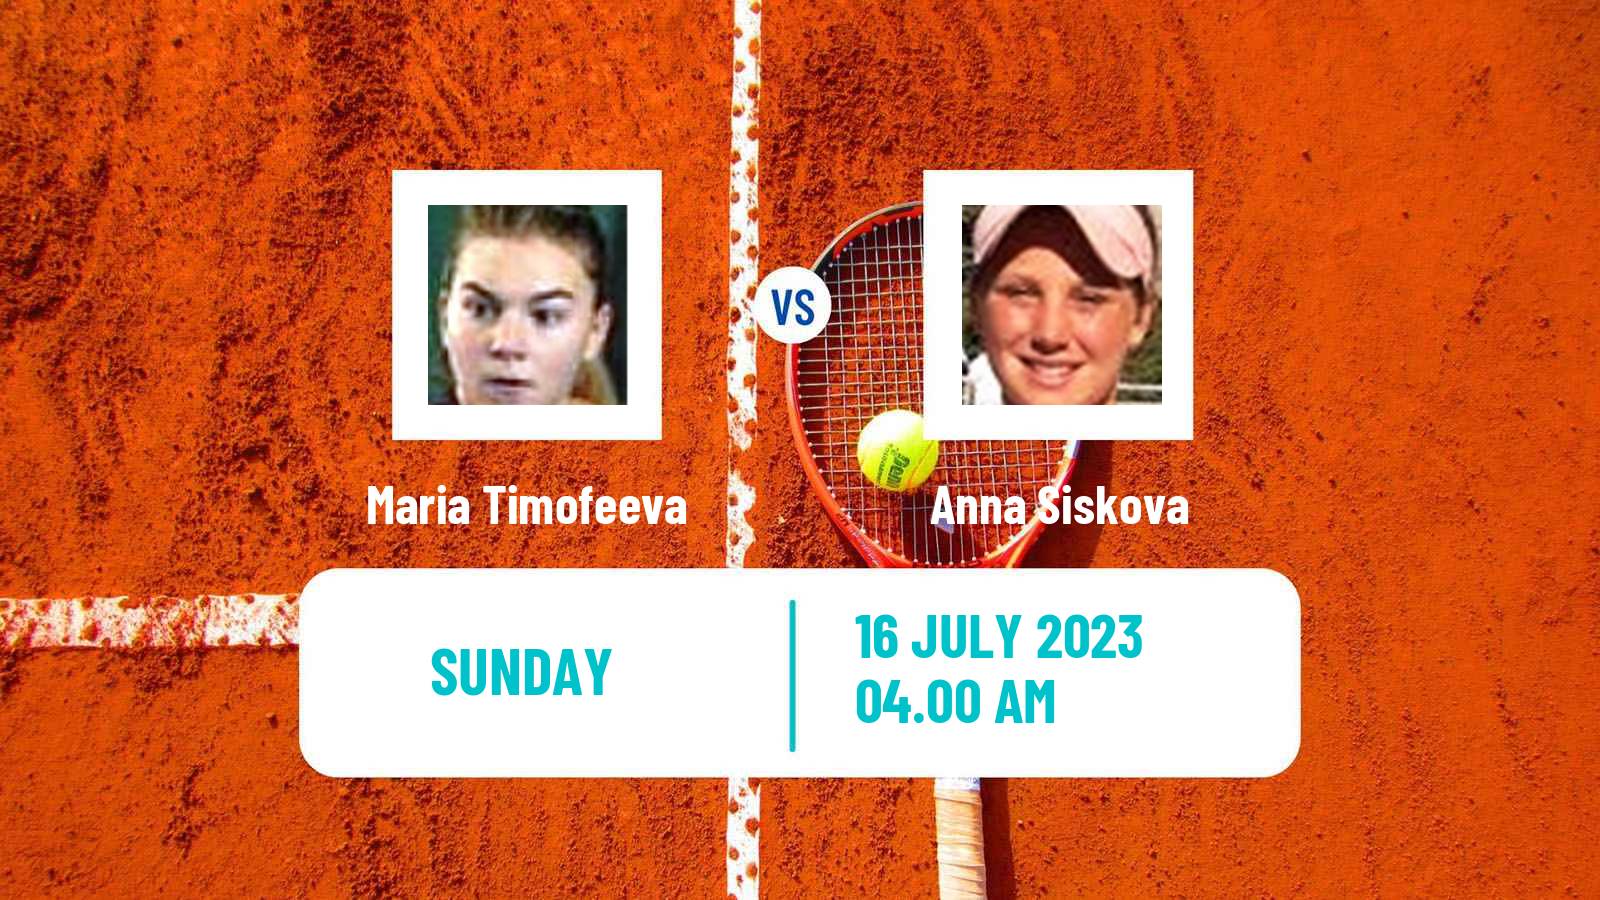 Tennis WTA Budapest Maria Timofeeva - Anna Siskova